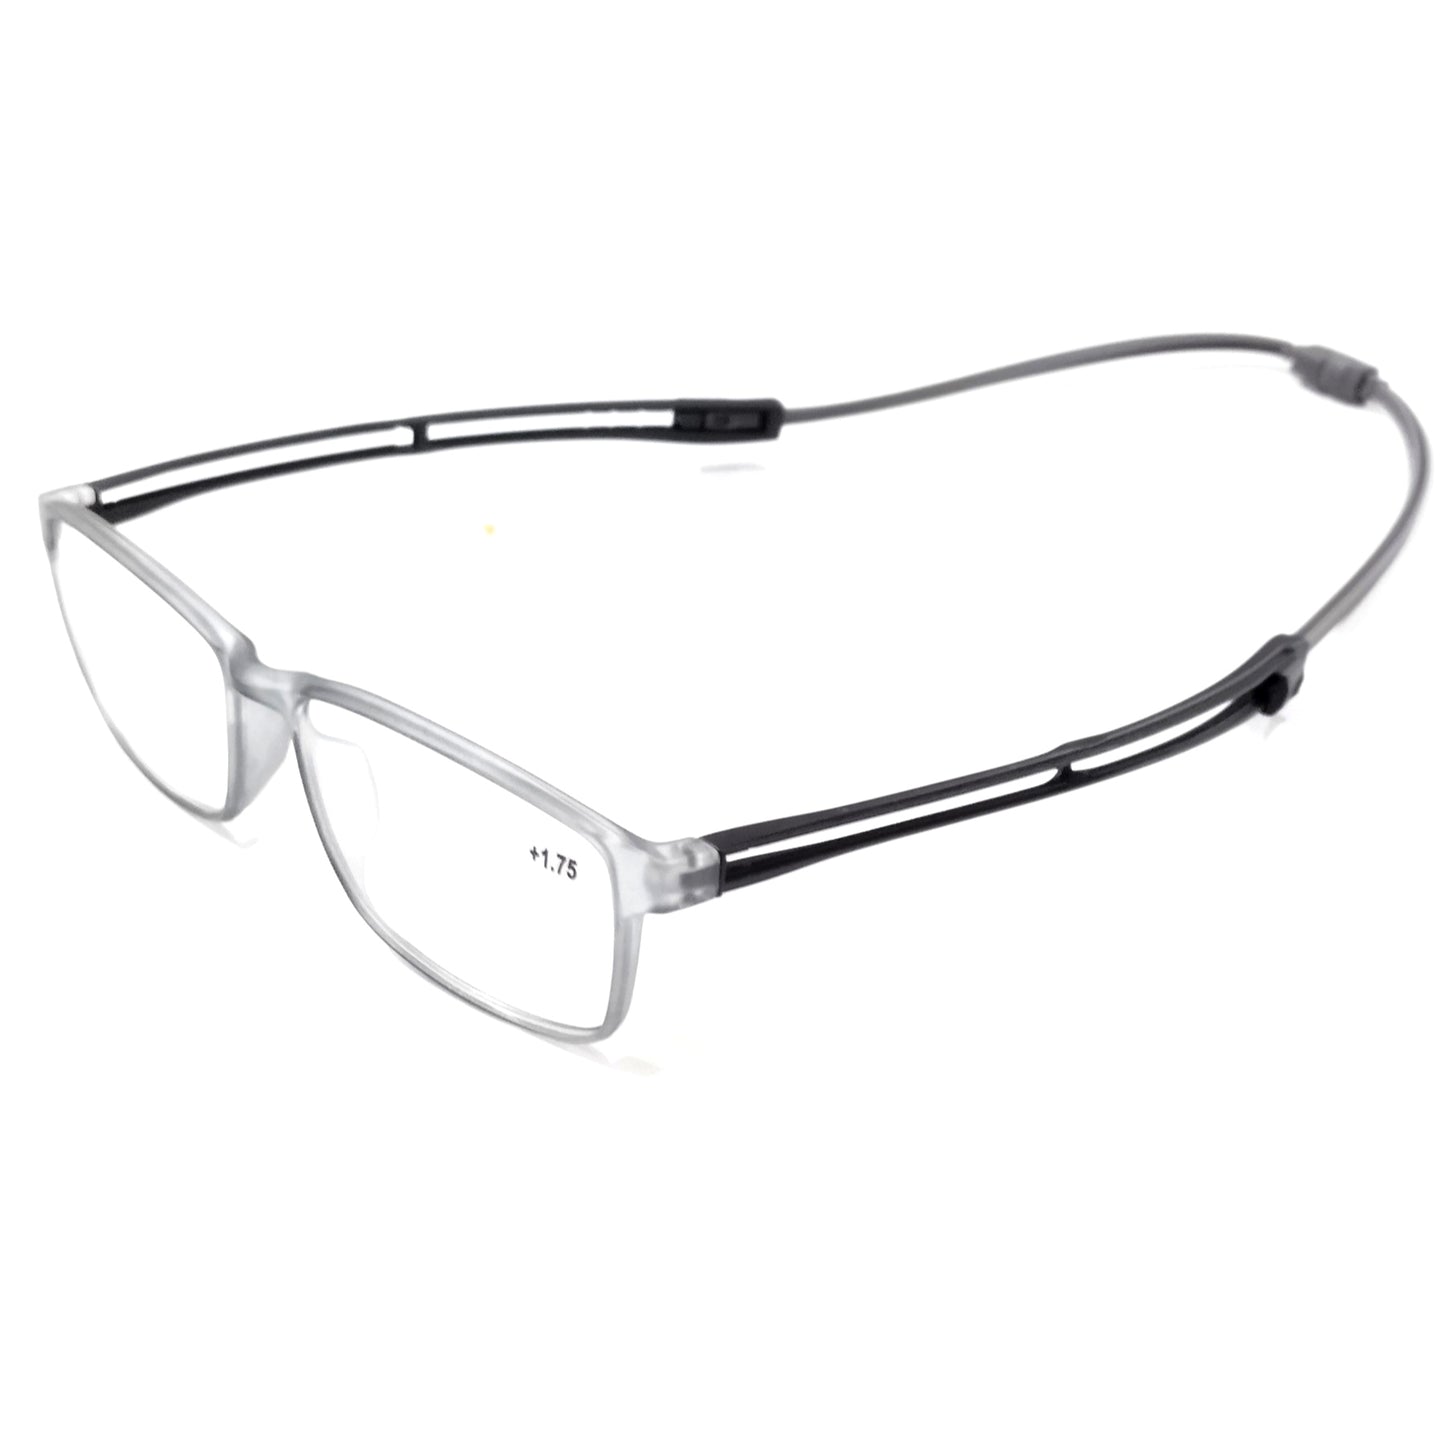 Grey Flexible Magnet Hanging Neck Glasses Blue Light Filter Lenses